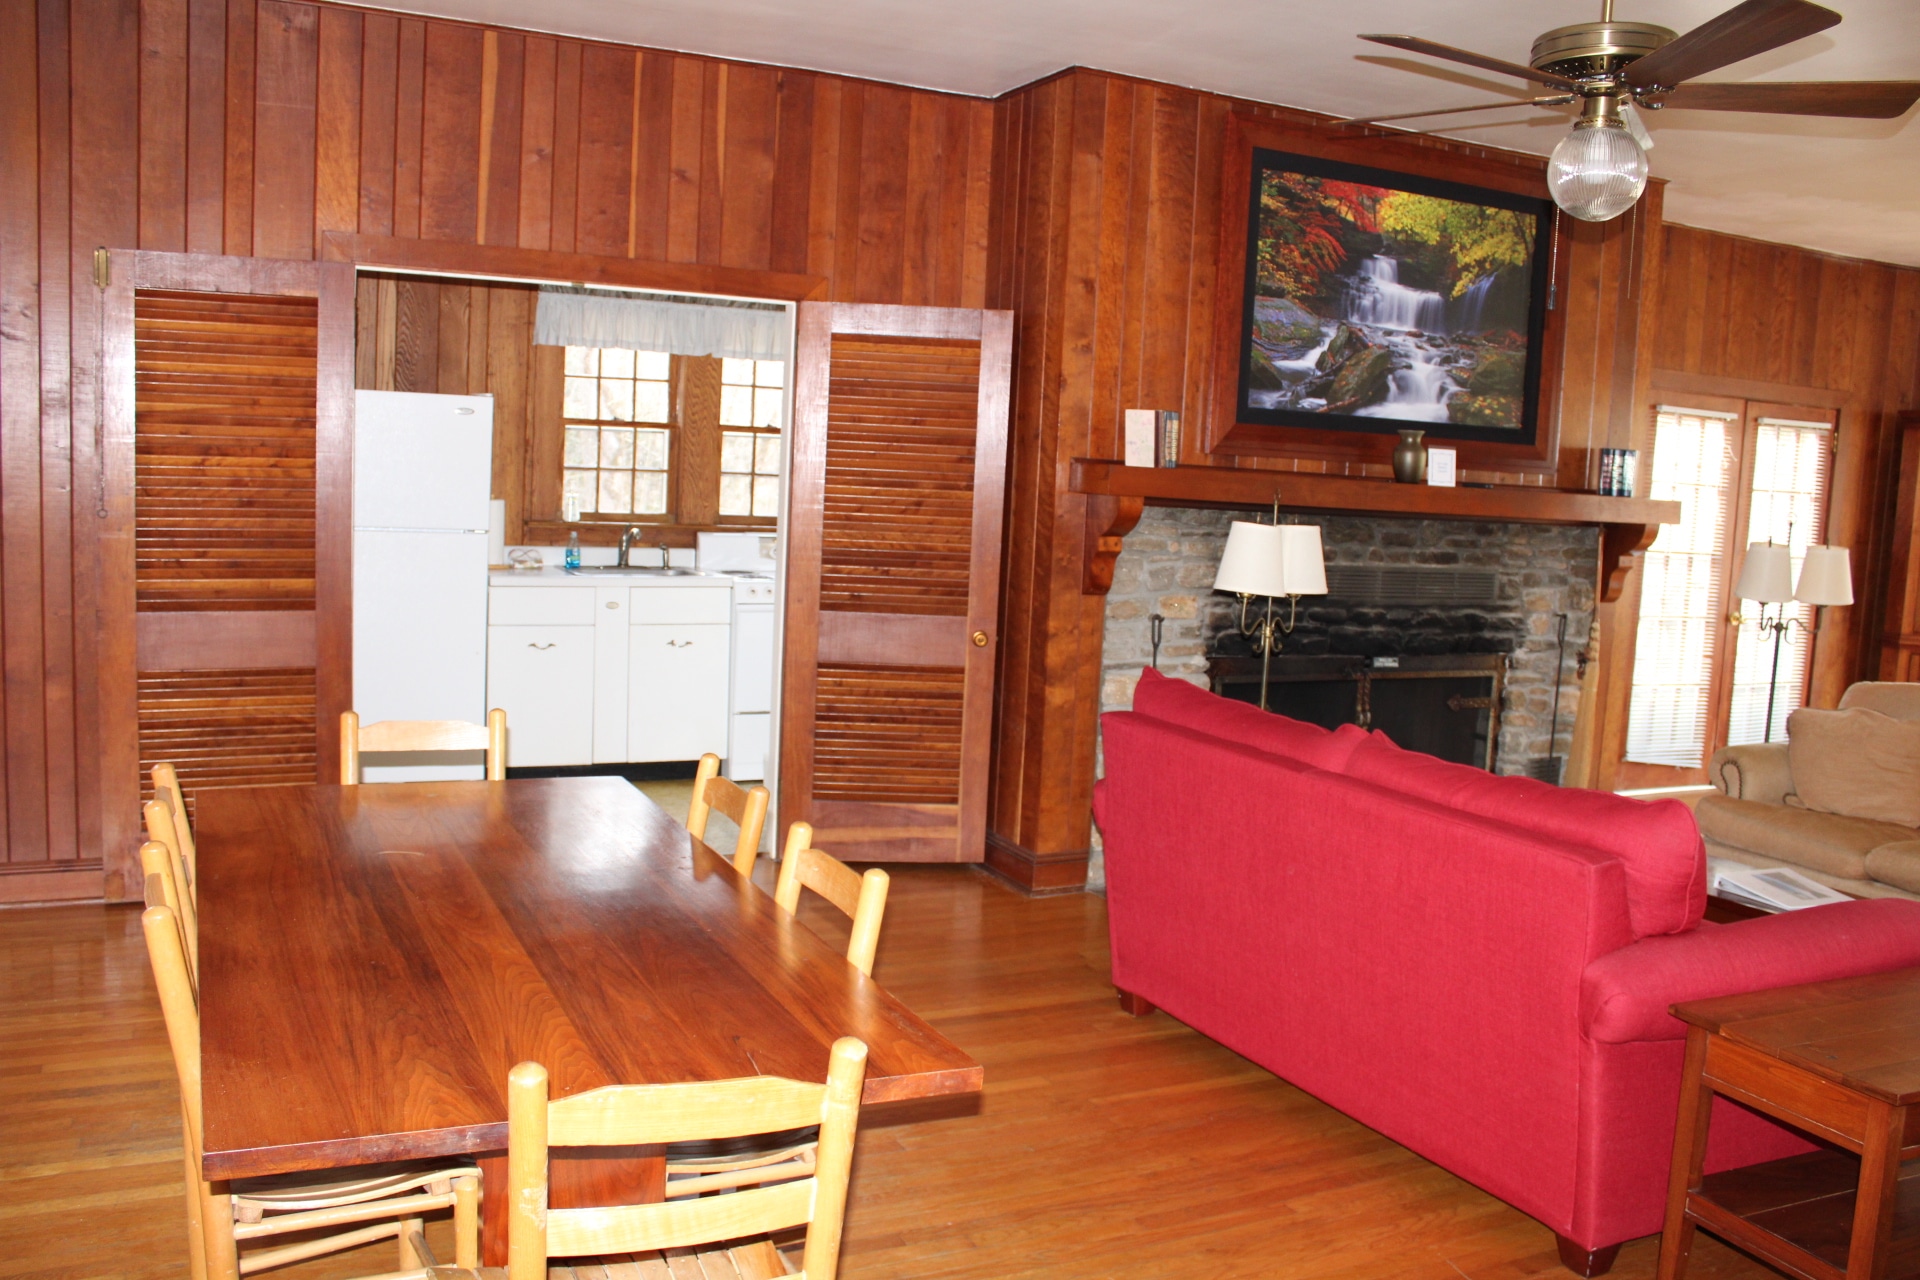 Hemlock Cabin living room and kitchen